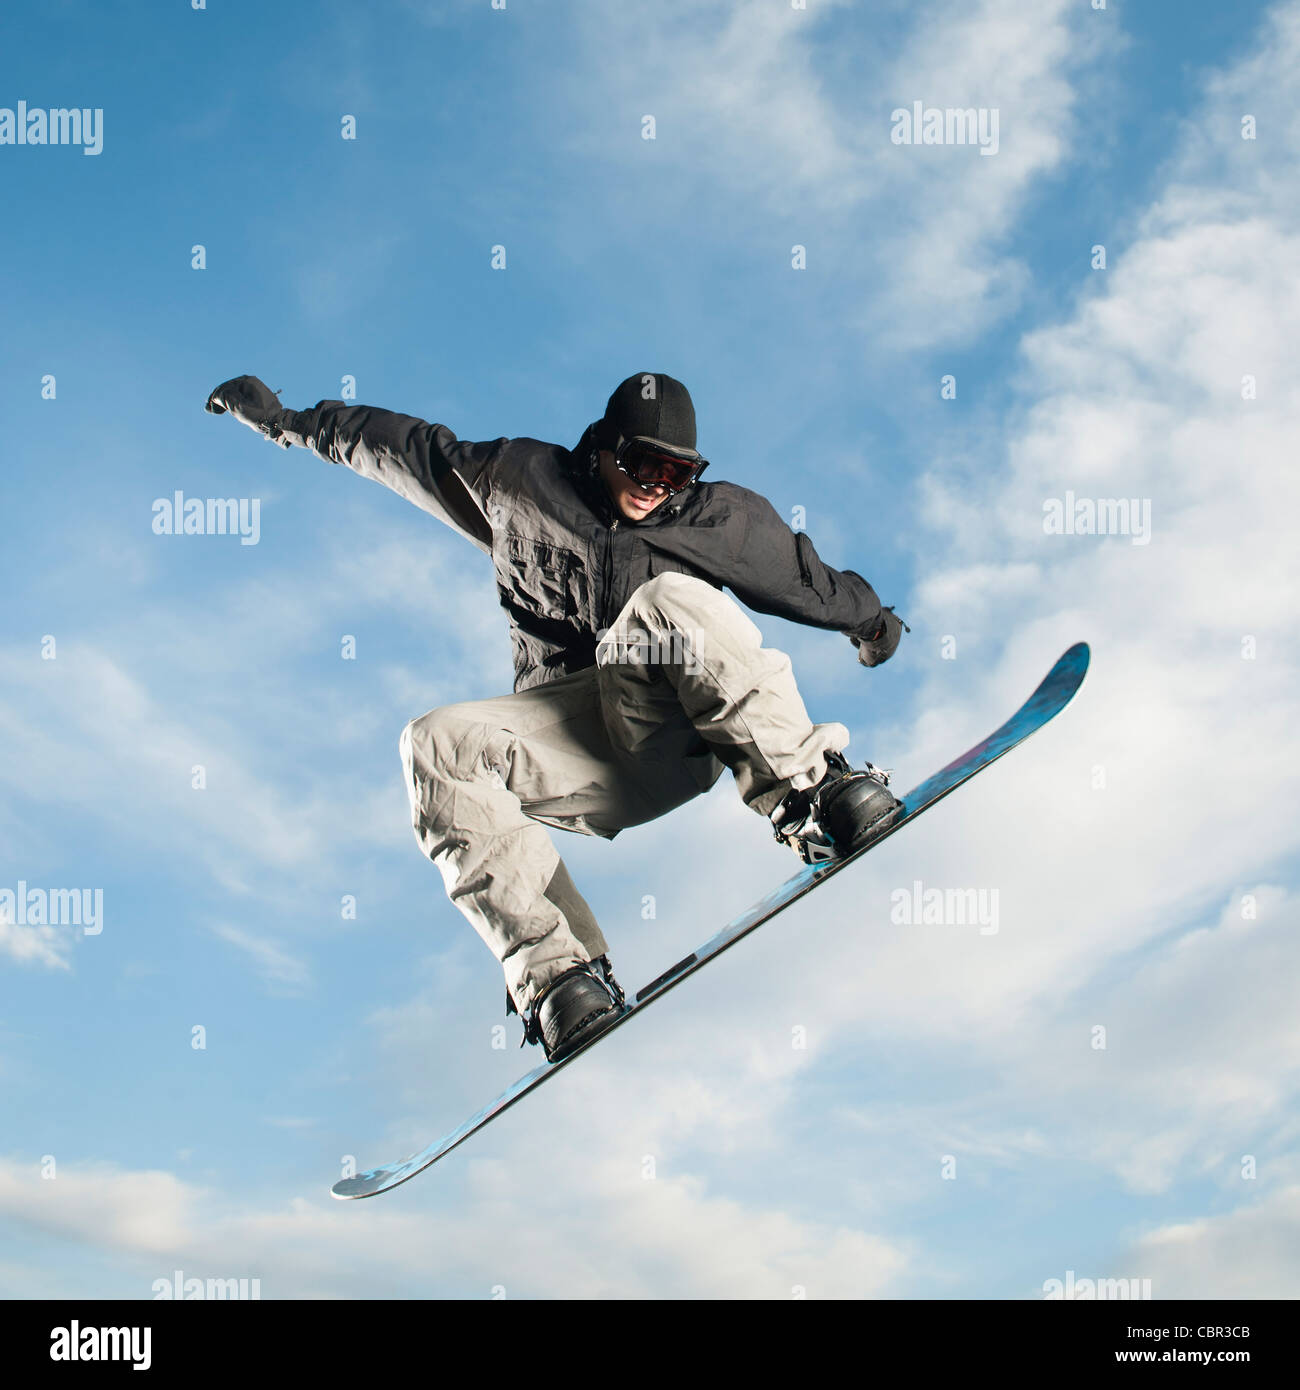 Caucasian man on snowboard in mid-air Stock Photo